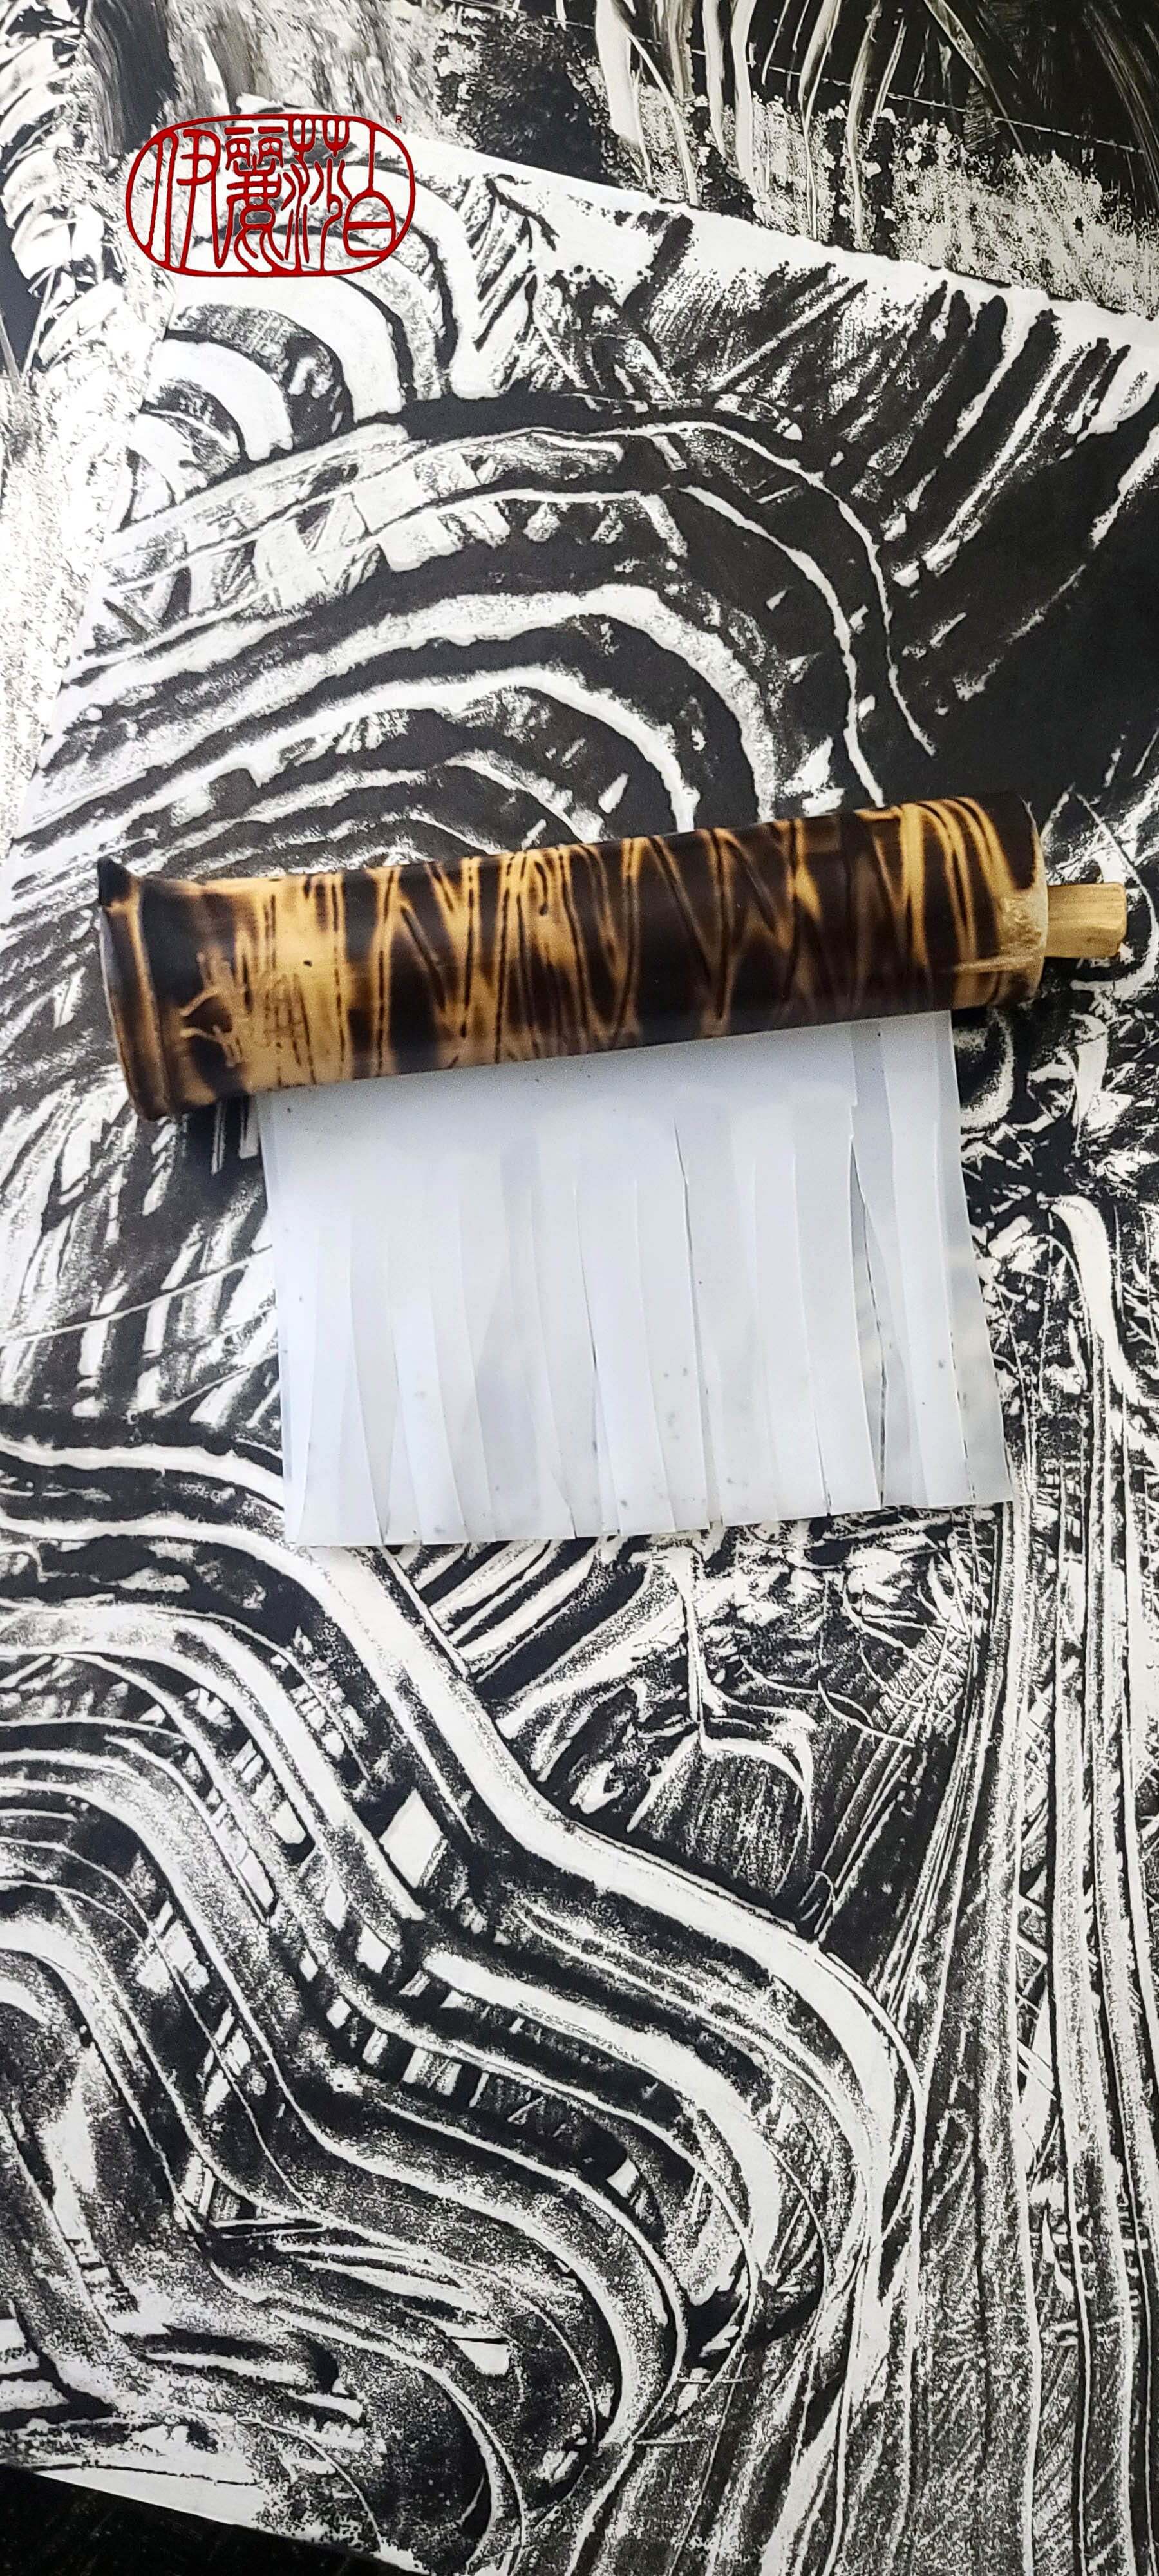 Silicone Paint Brush With Bamboo Handle – Elizabeth Schowachert Art